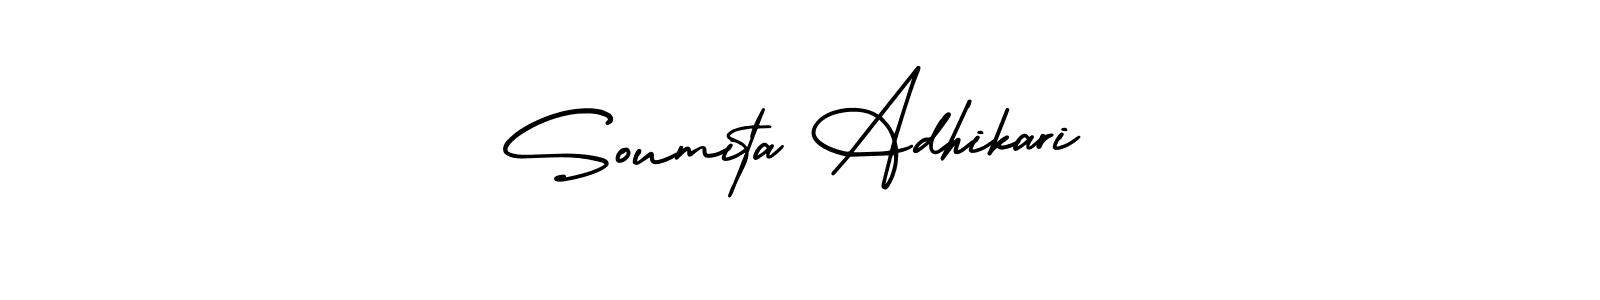 Make a beautiful signature design for name Soumita Adhikari. Use this online signature maker to create a handwritten signature for free. Soumita Adhikari signature style 3 images and pictures png